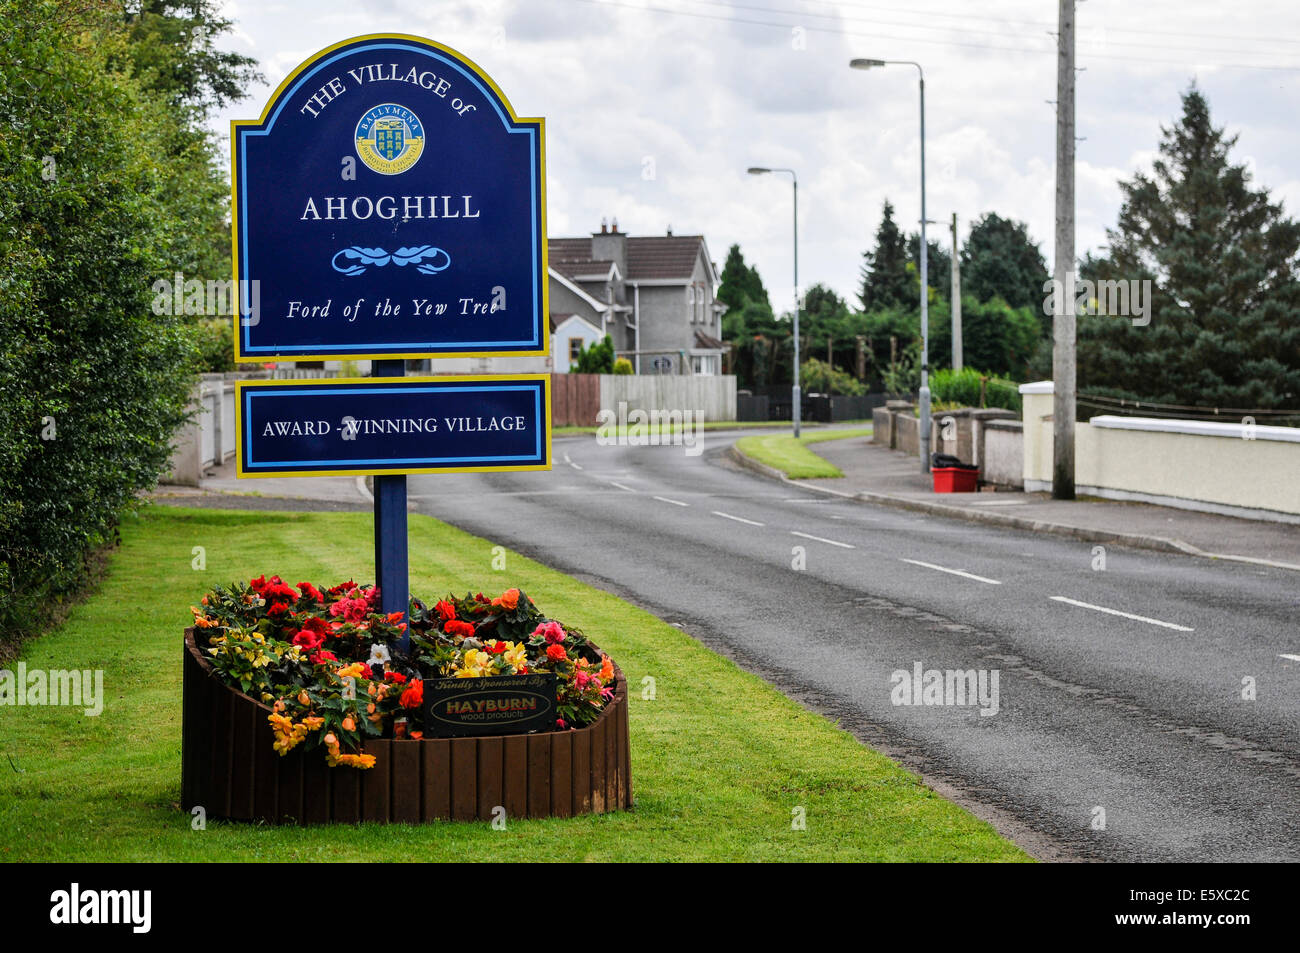 Ballymena, Northern Ireland. 7th Aug 2014 - Award winning village of Ahoghill Credit:  Stephen Barnes/Alamy Live News Stock Photo